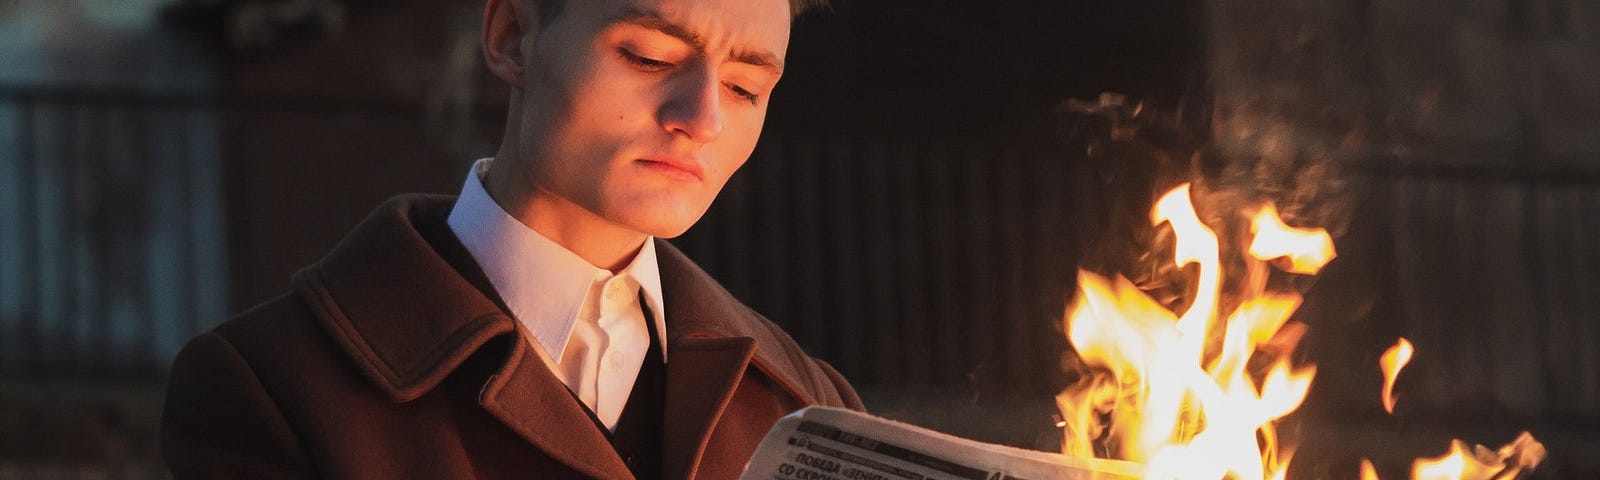 A man reading a burning newspaper